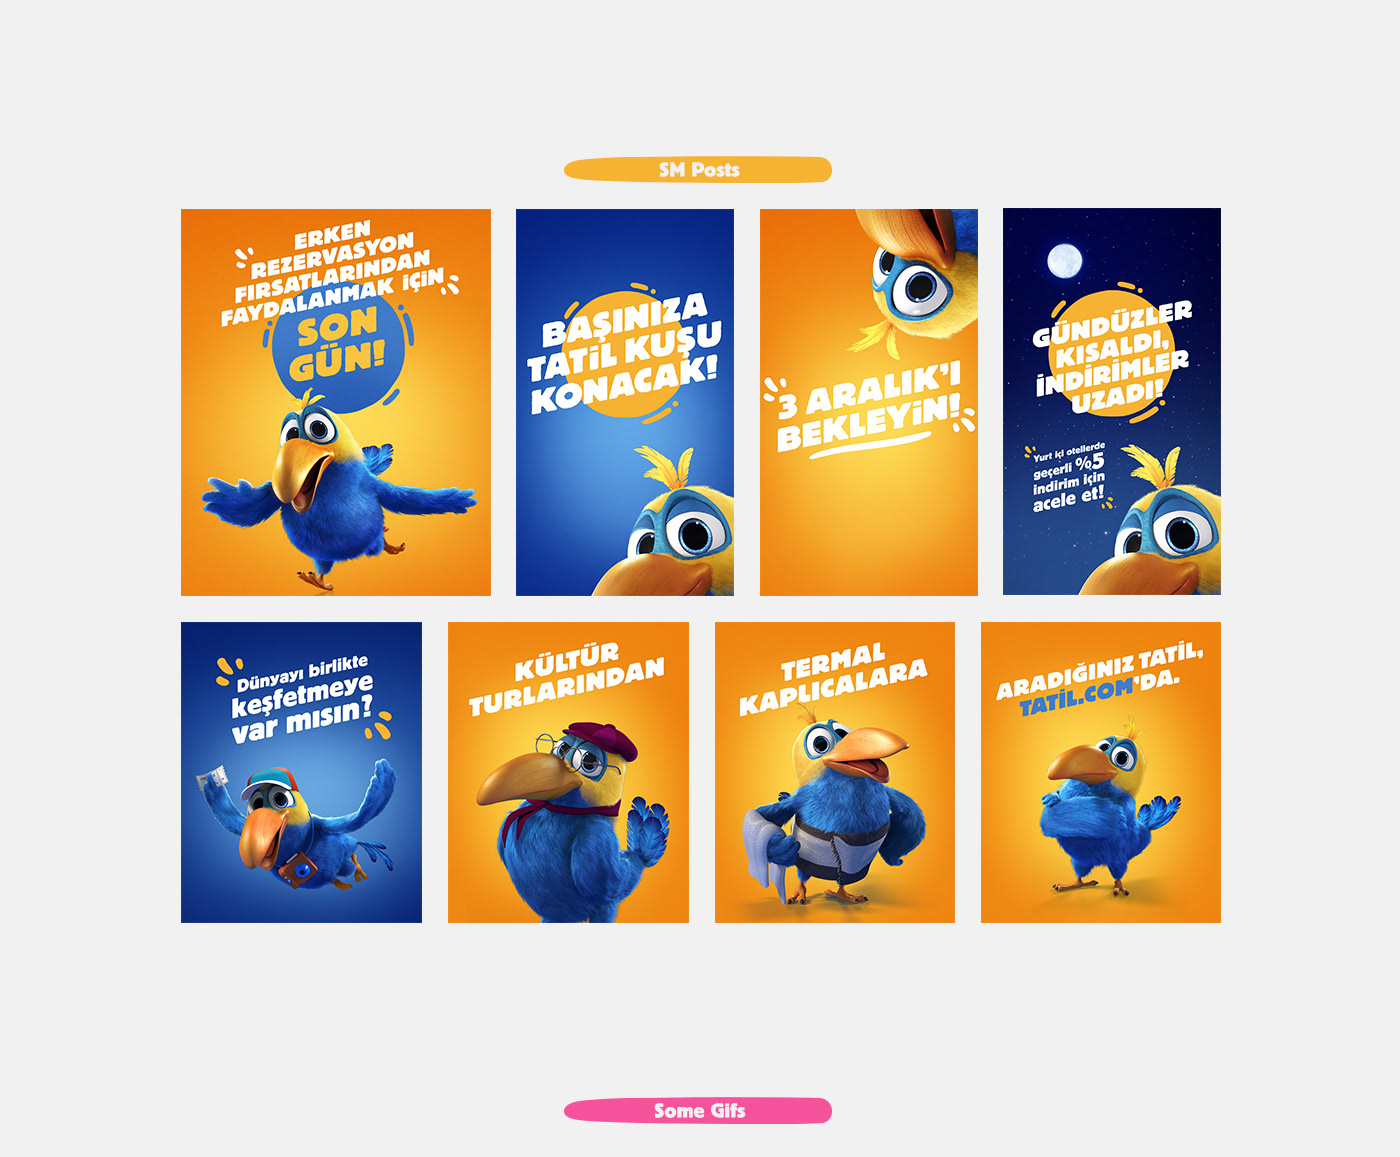 Holiday tatil bird kuş campaign Character design  tvc Advertising  design Outdoor